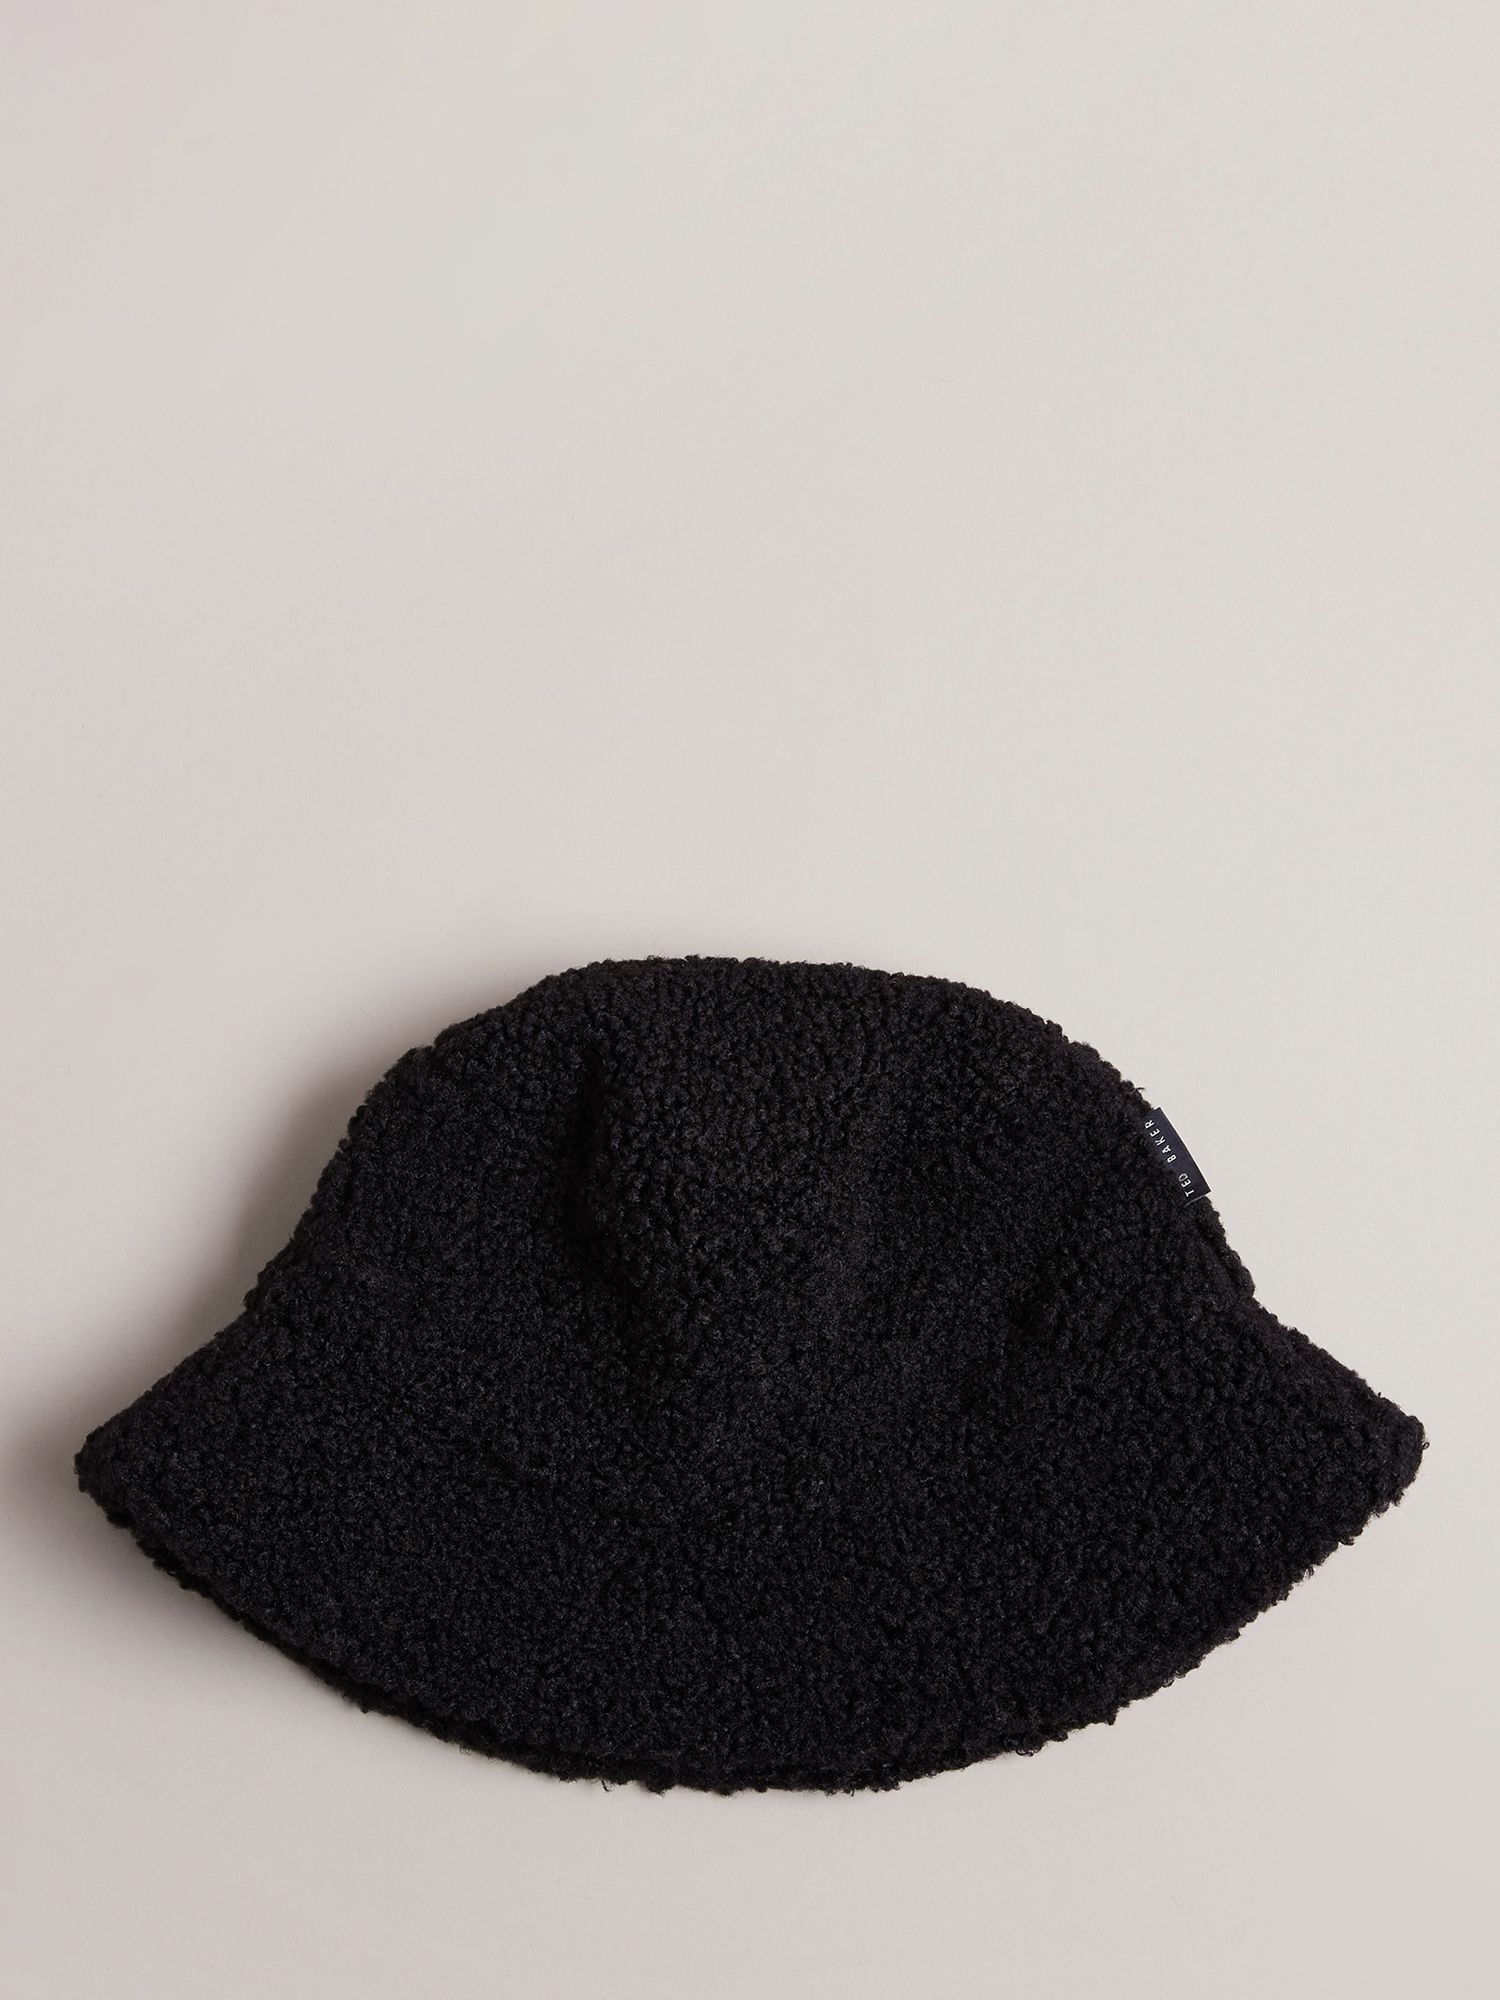 Ted Baker Pamells Teddy Bucket Hat, Black, One Size